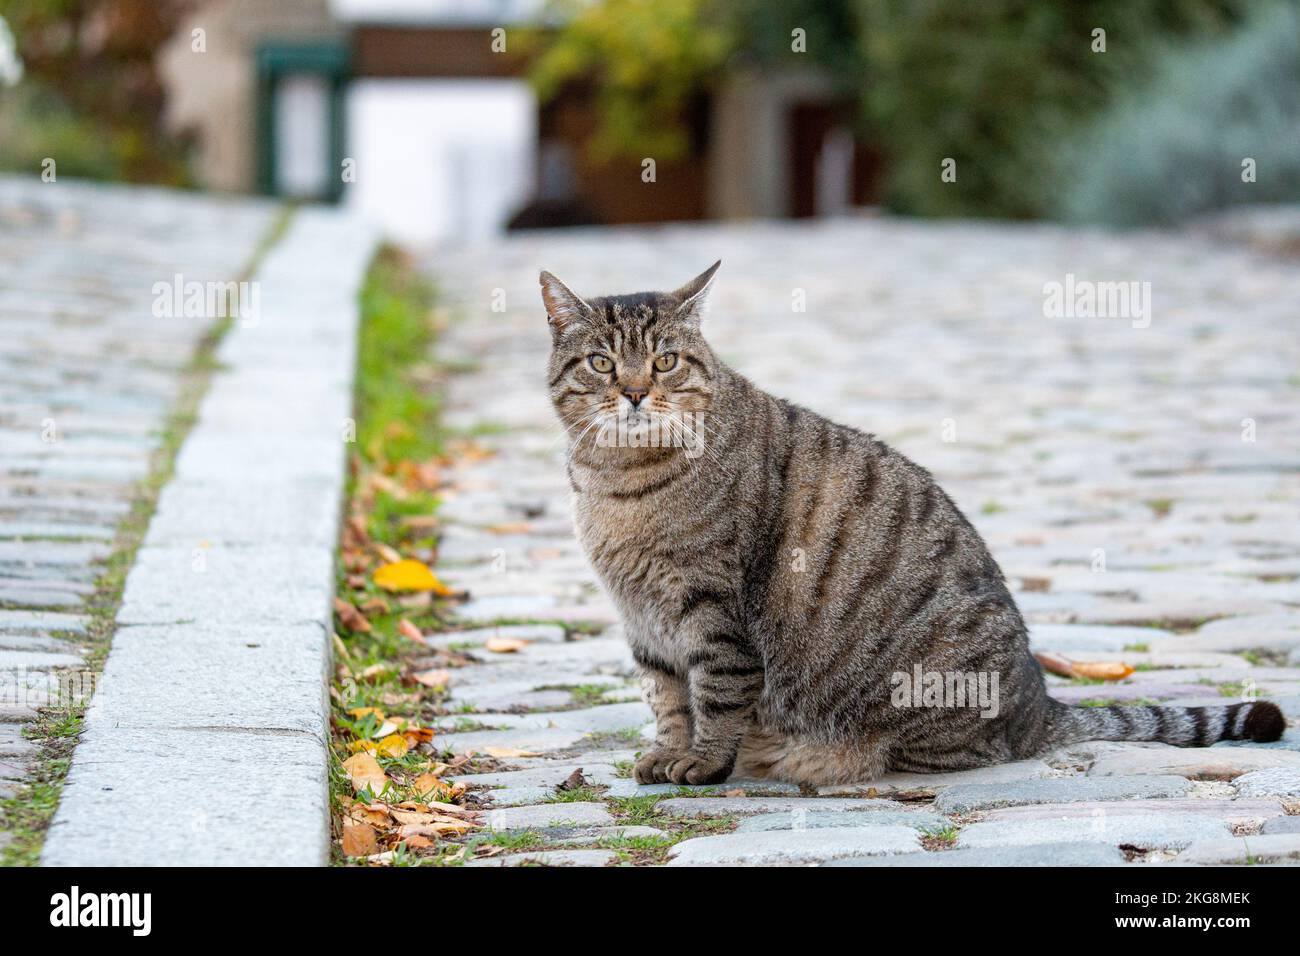 Overweight street cat Stock Photo